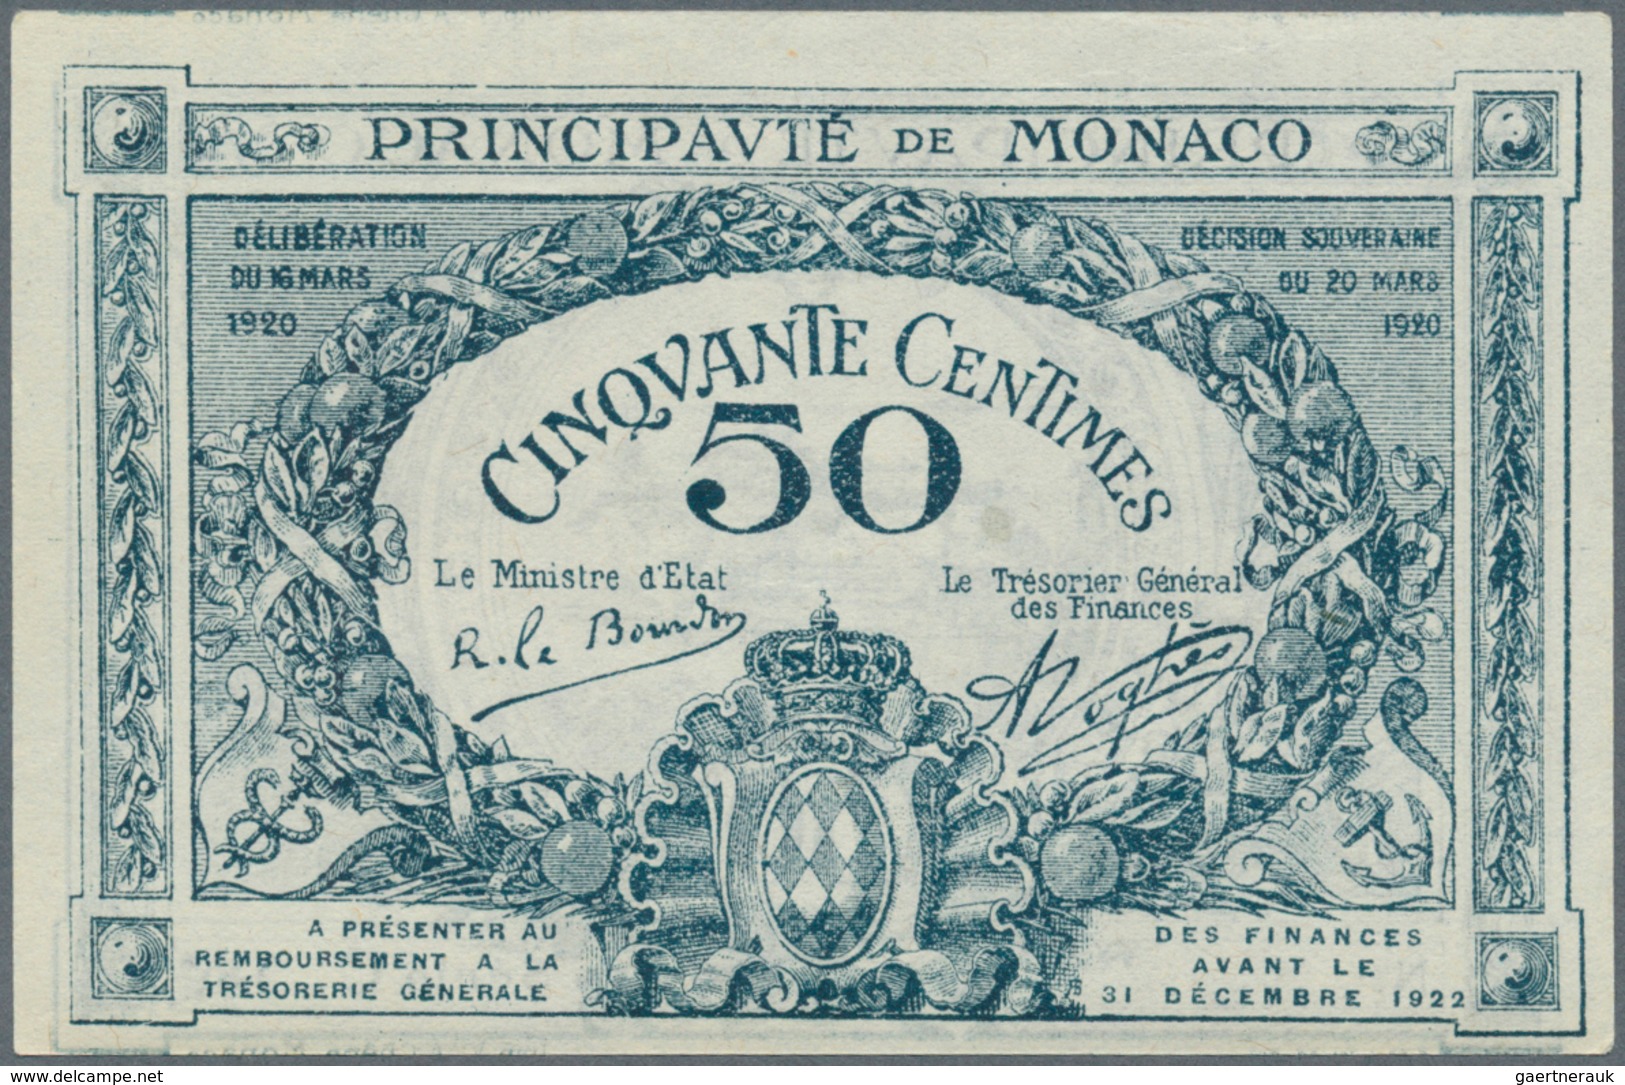 Monaco: 50 Centimes 1920 P. 3 Series C, Remainder W/o S/N, Crisp Original Paper, Only Light Handling - Mónaco